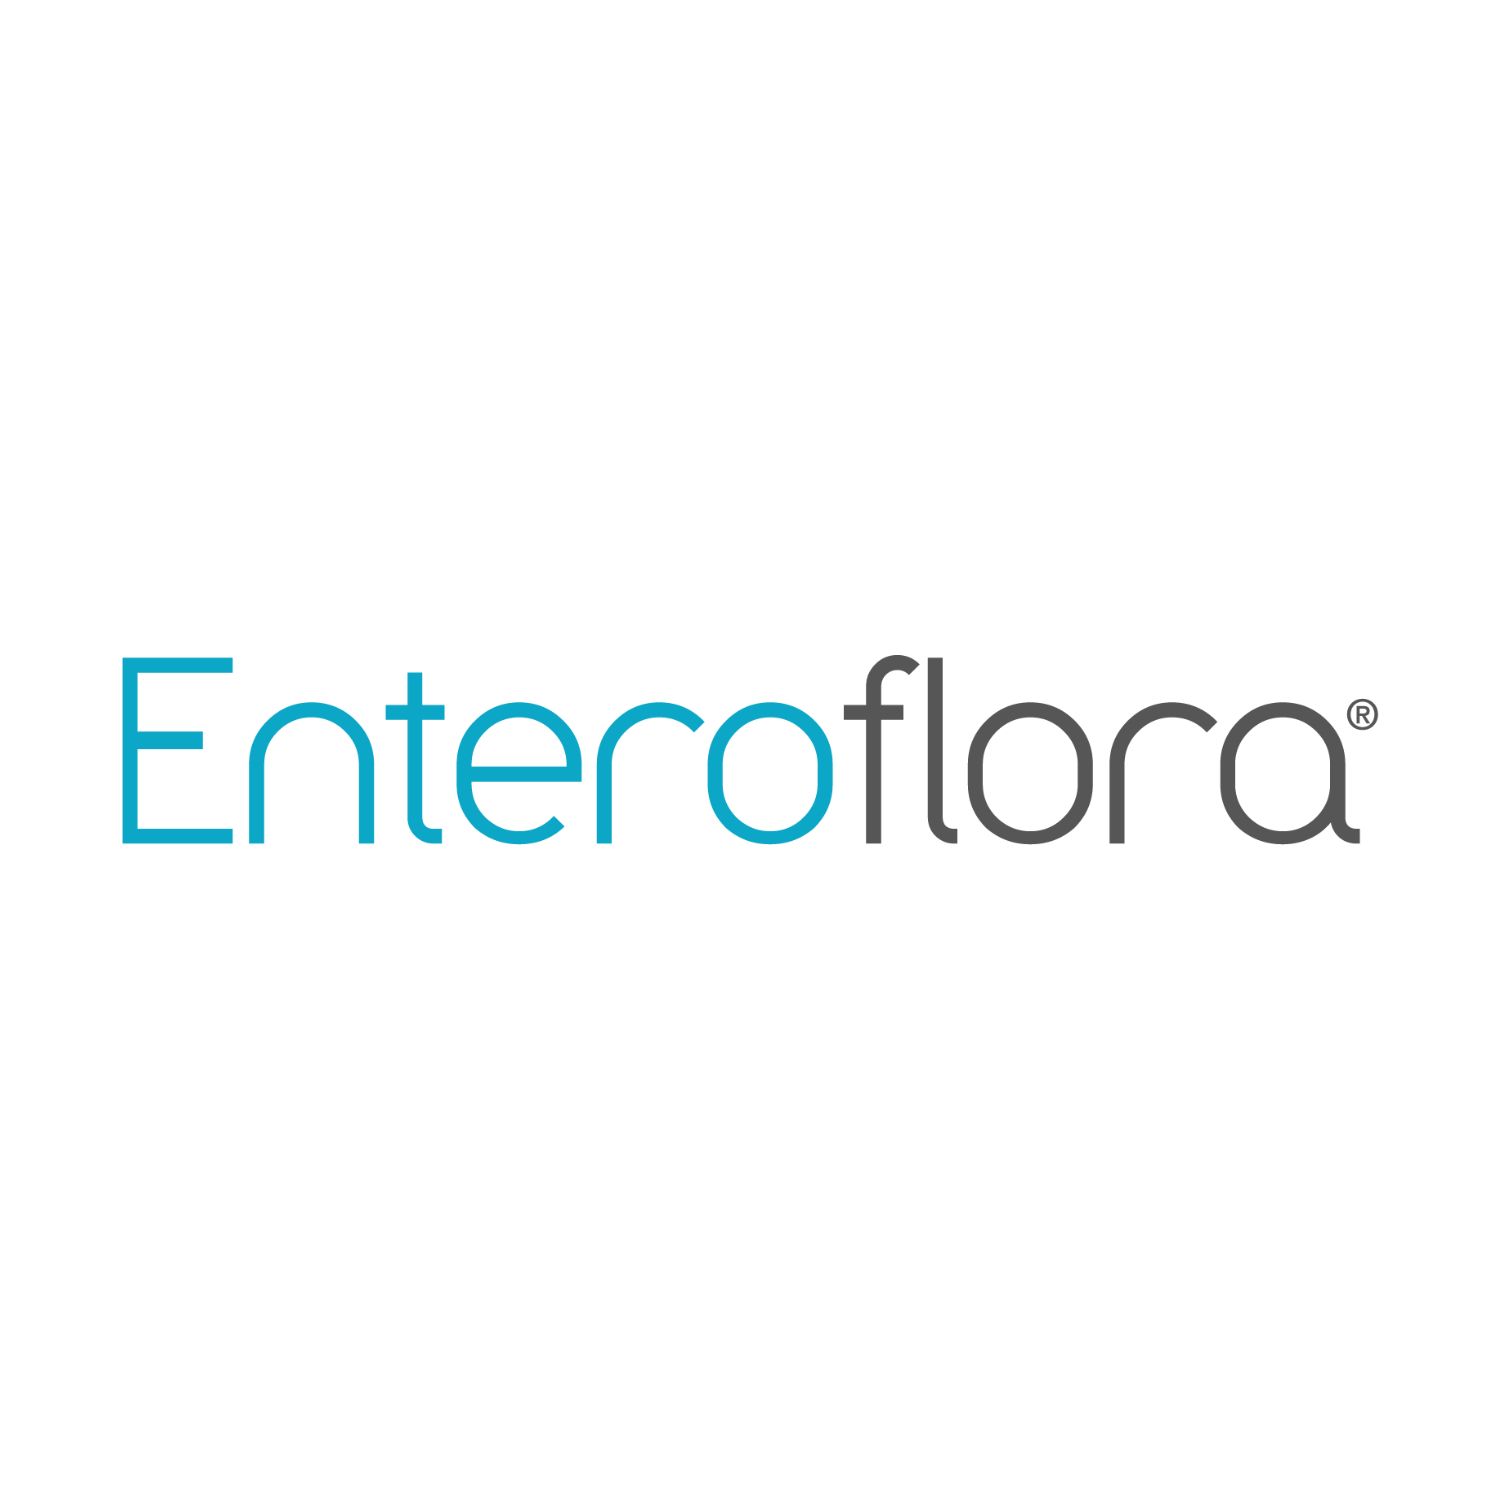 Enteroflora